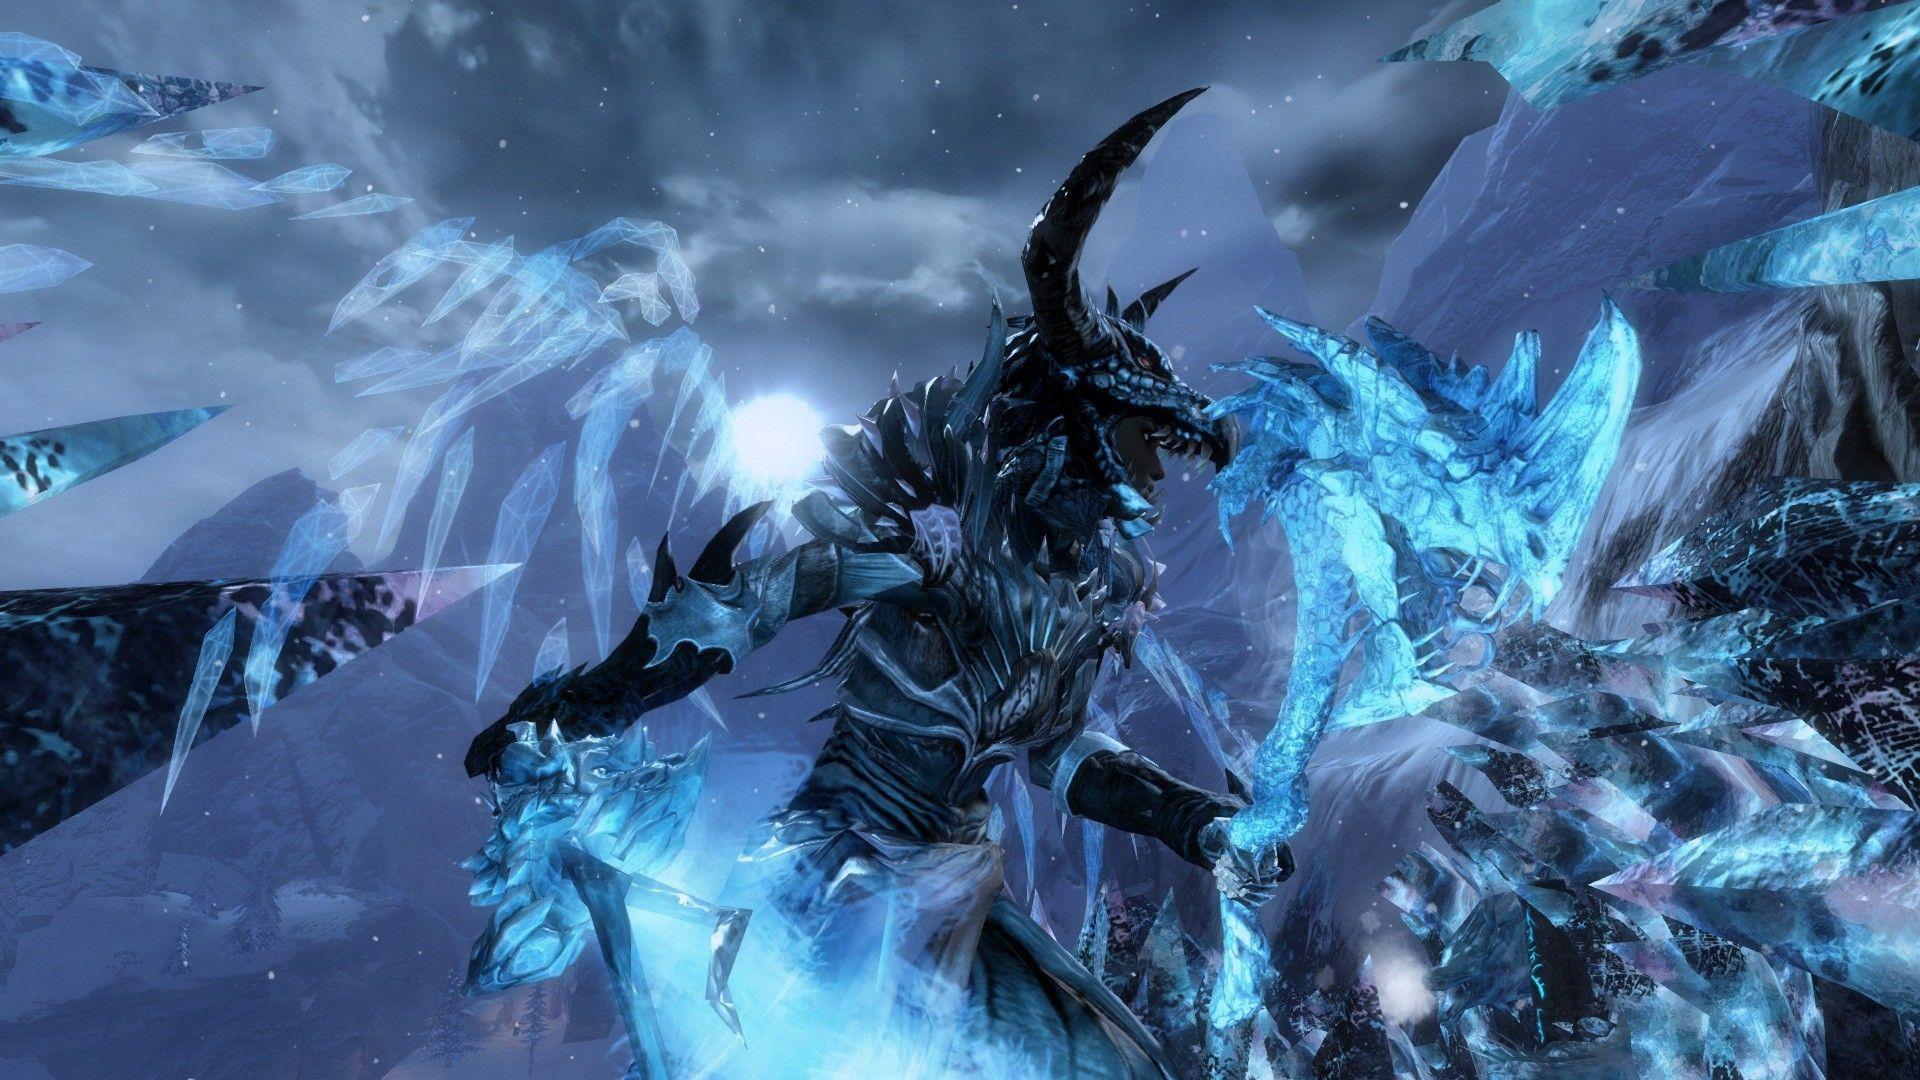 Cool Ice Dragon Logo - Ice Dragon Wallpaper ·①